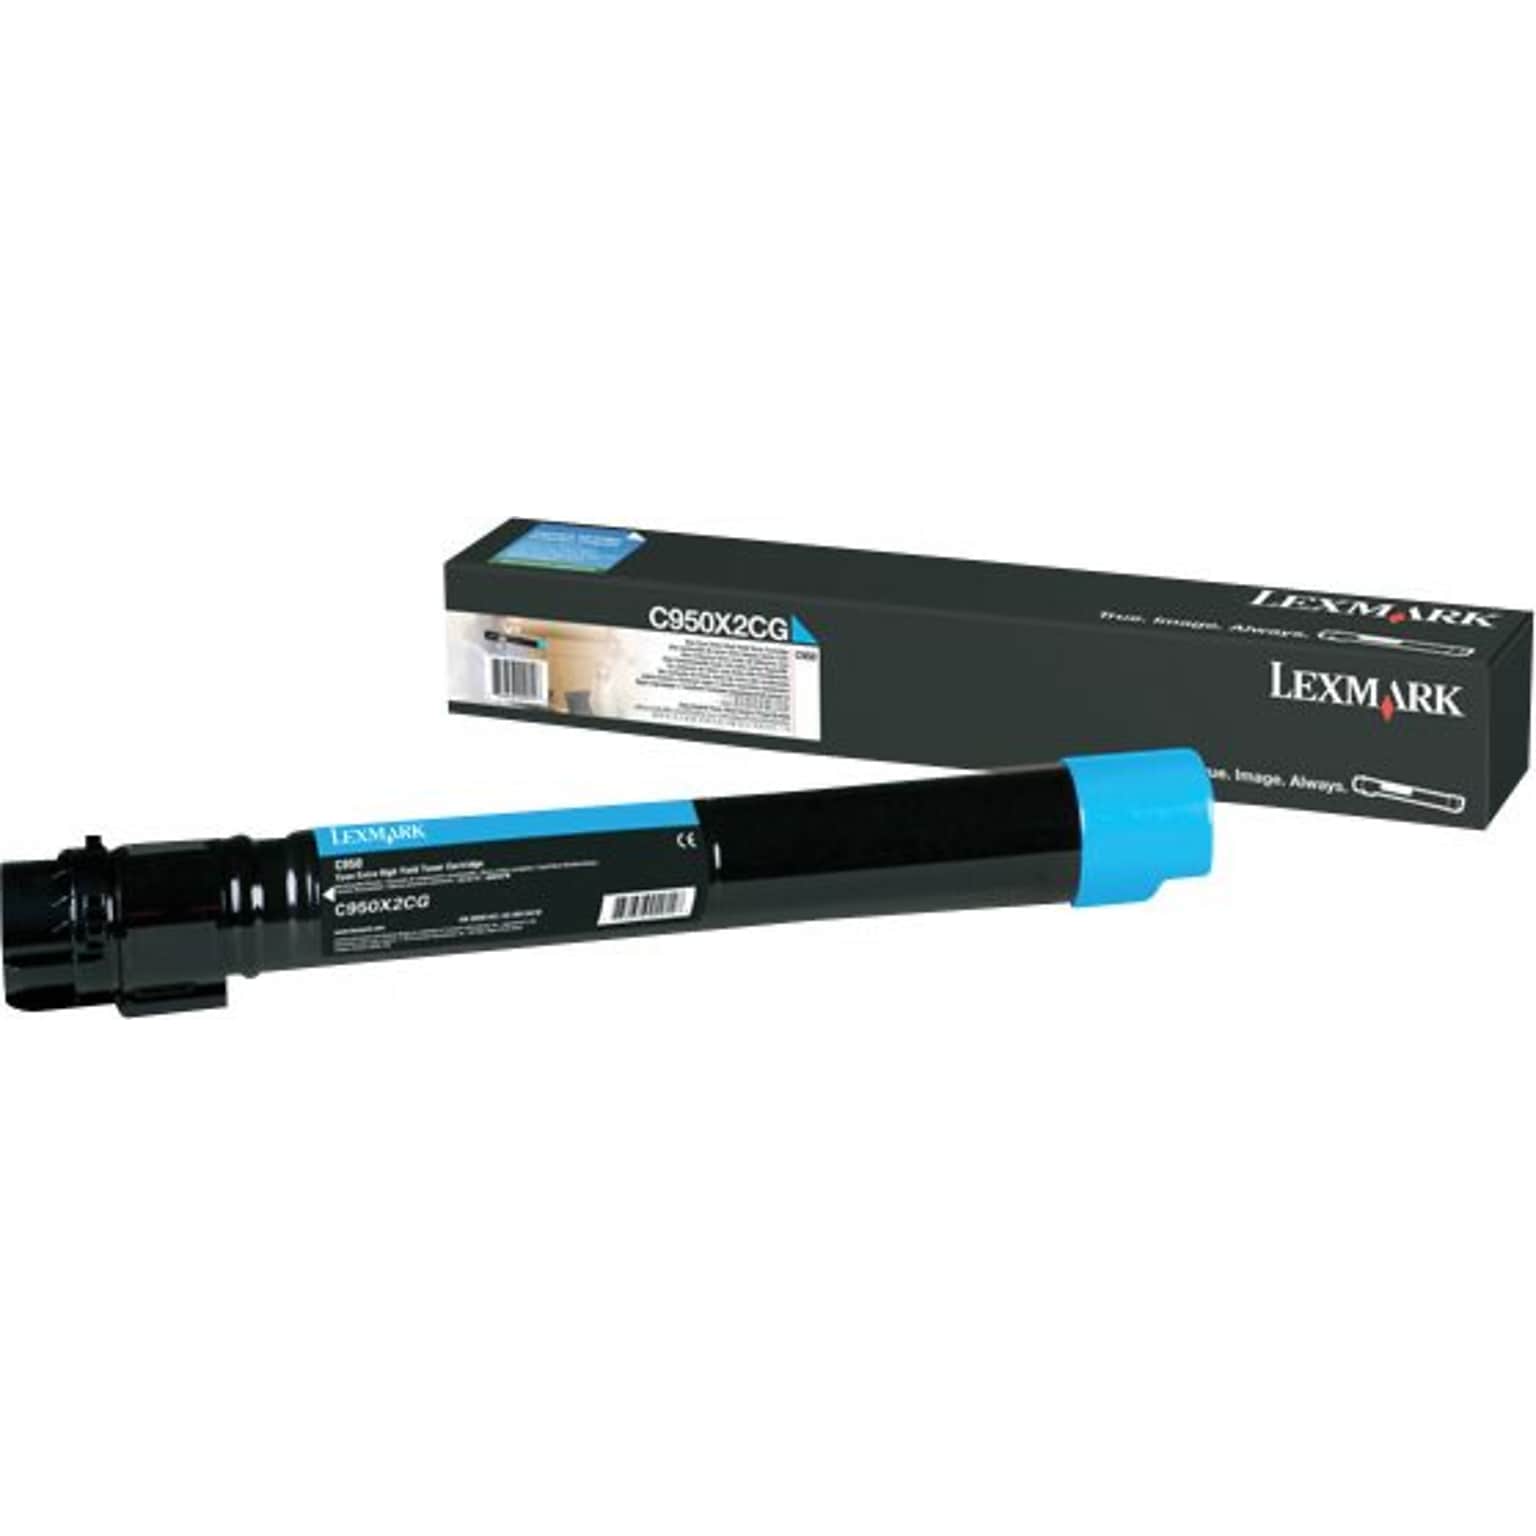 Lexmark C950 Cyan Extra High Yield Toner Cartridge